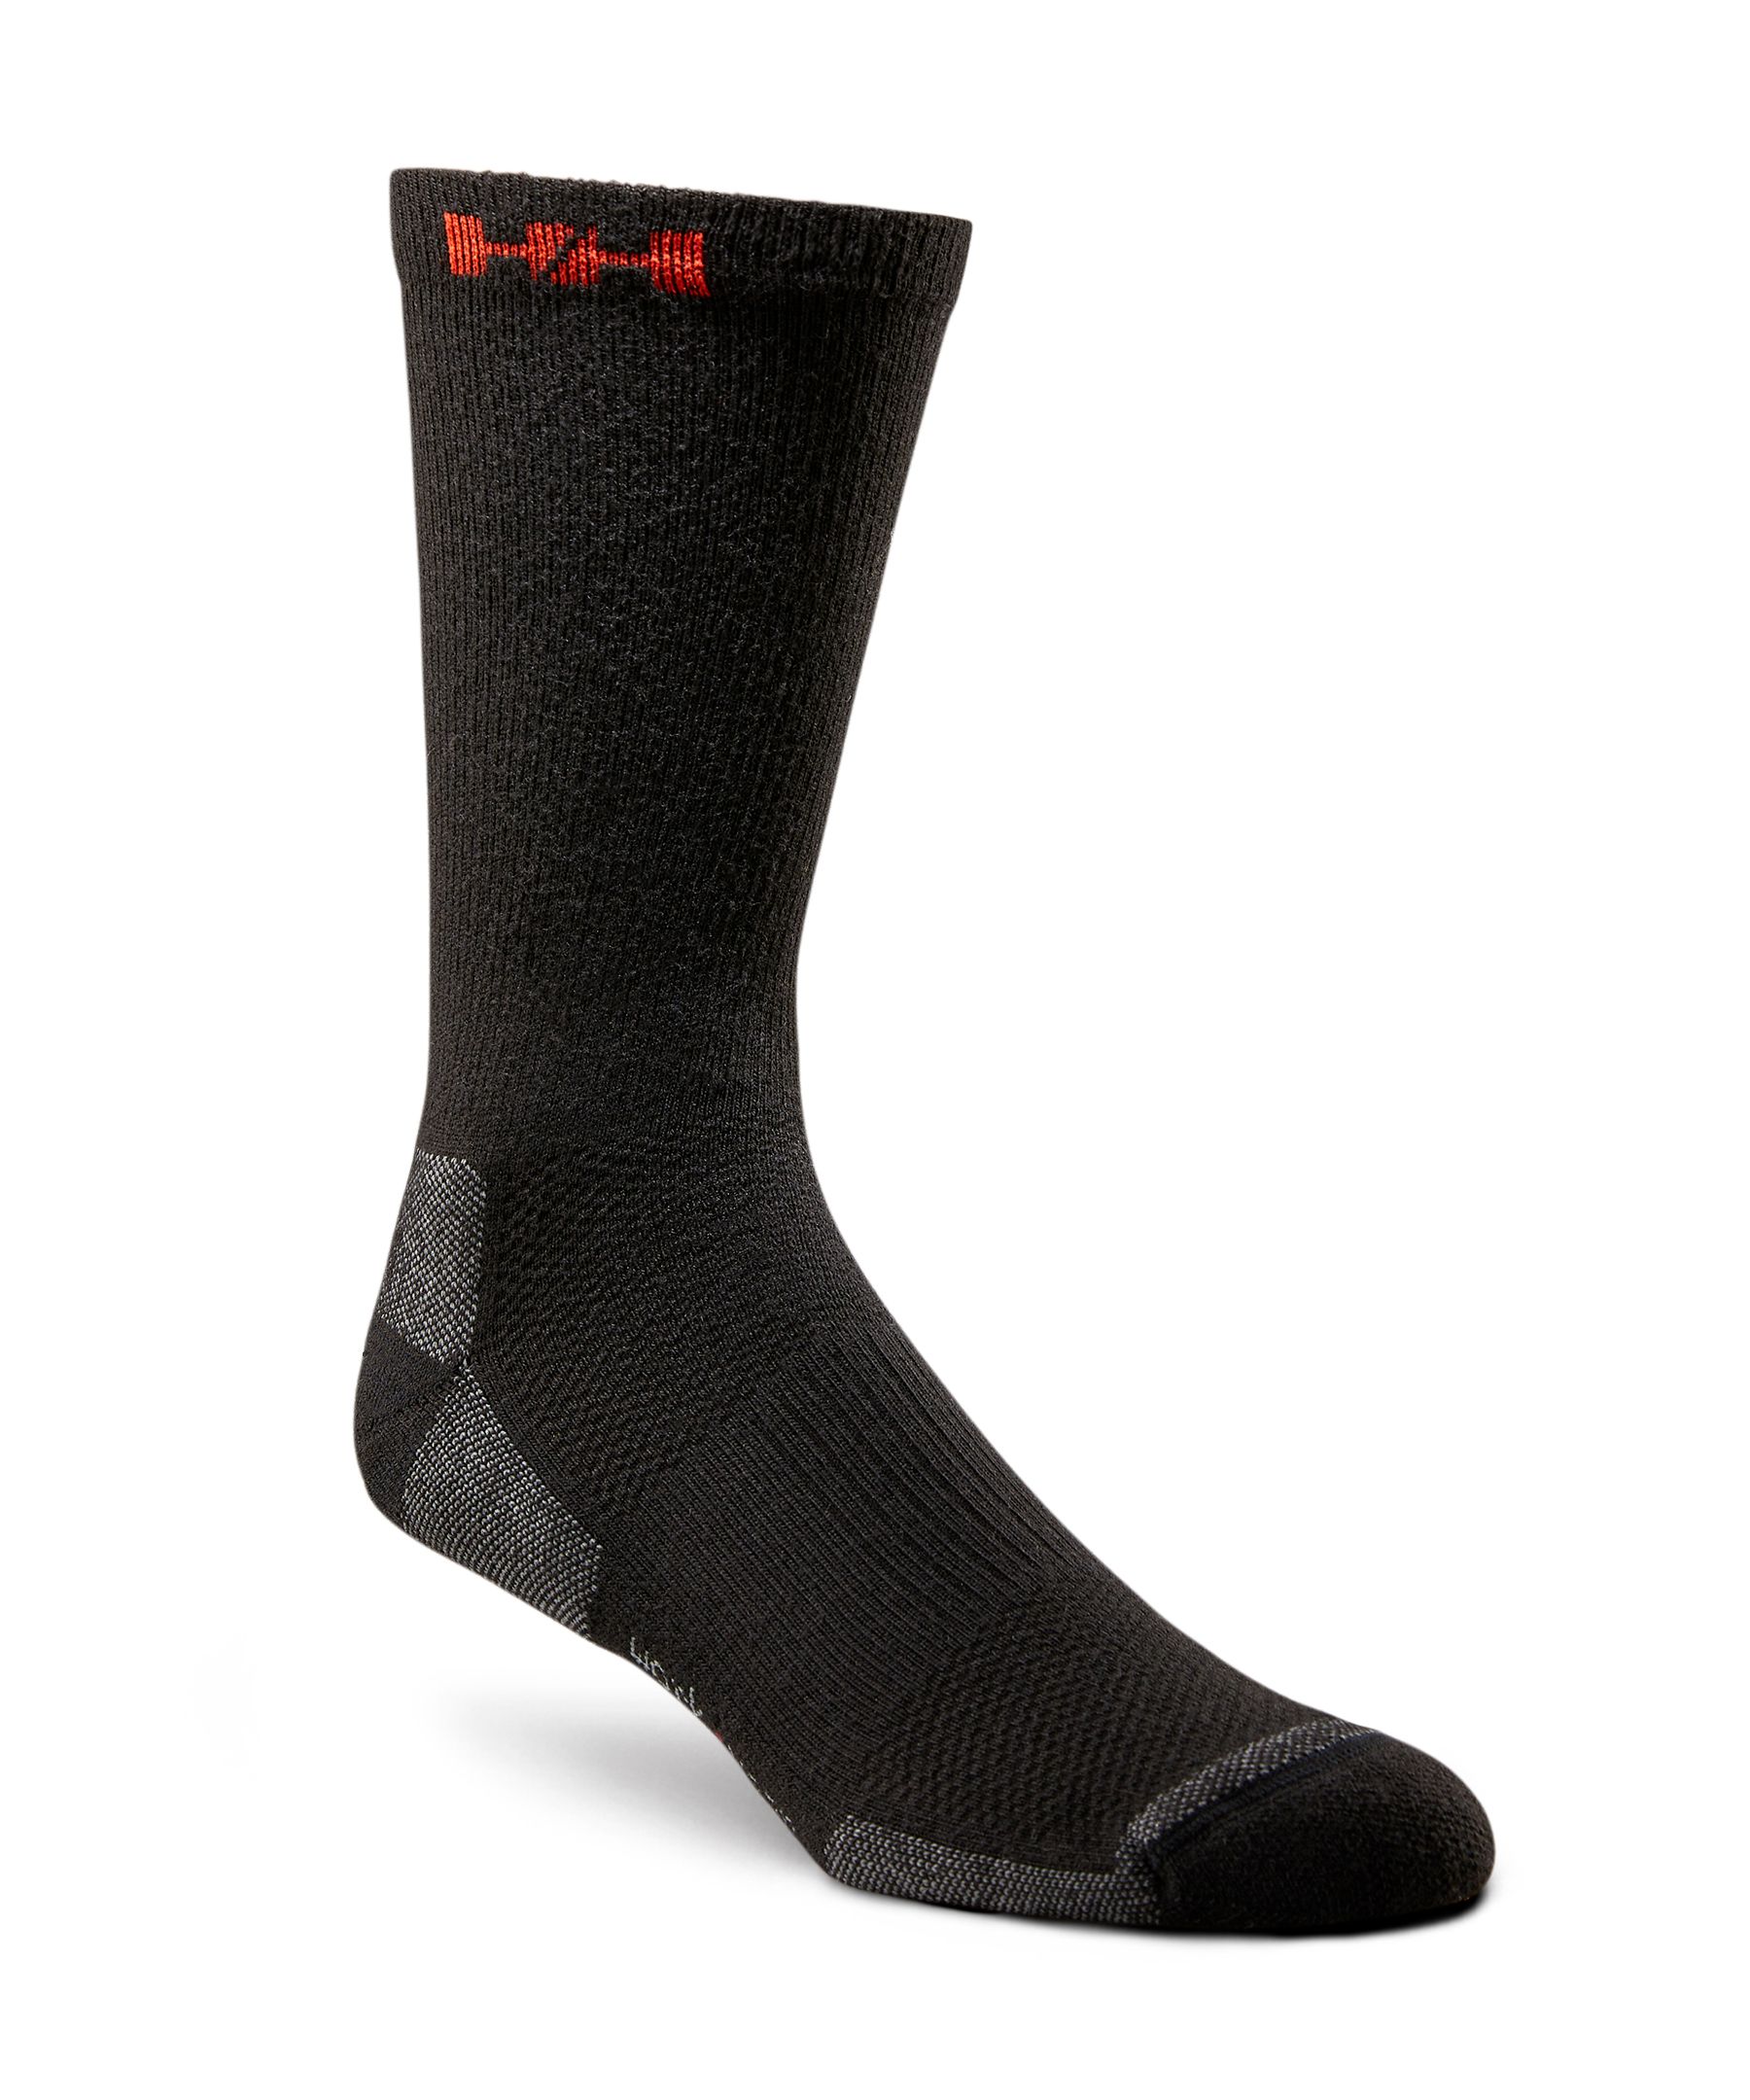 Dakota Workpro Series Men's DriWear Cordura Blend Work Boot Socks